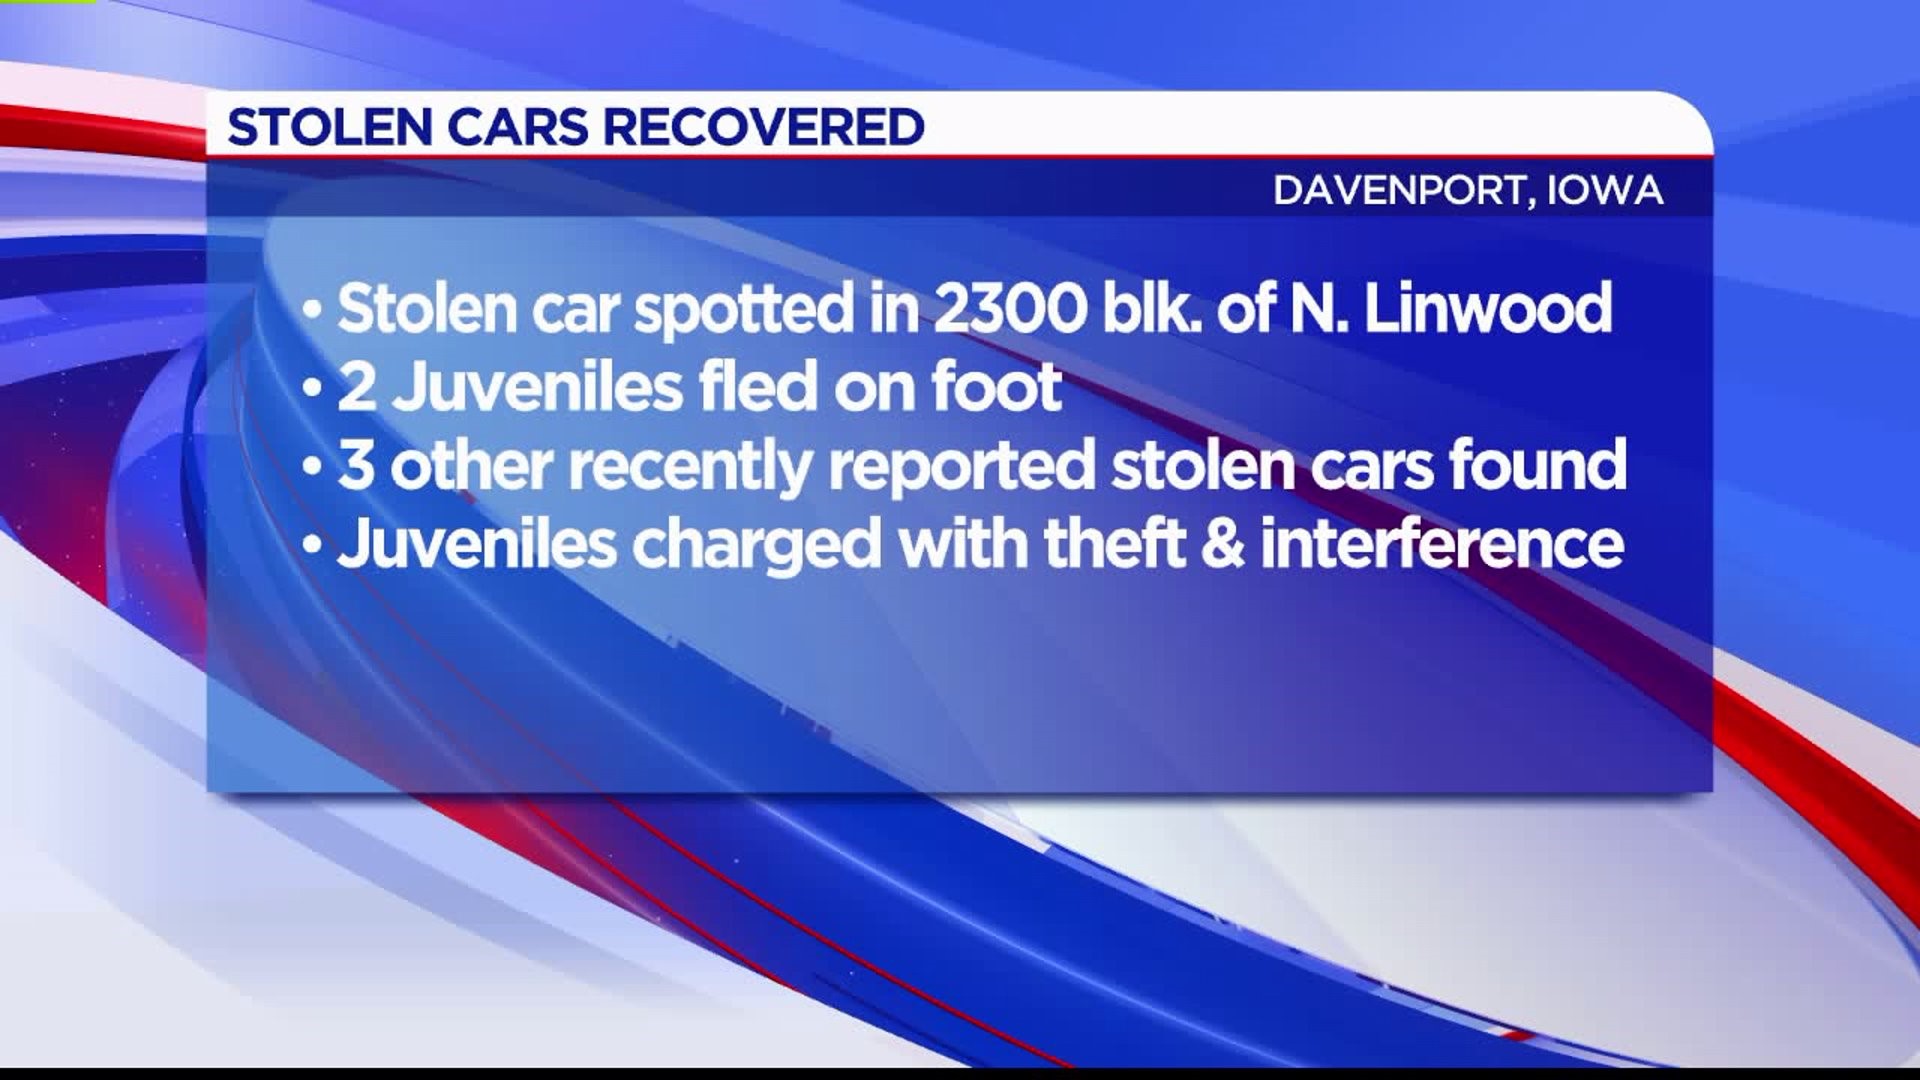 Davenport police recover four stolen cars